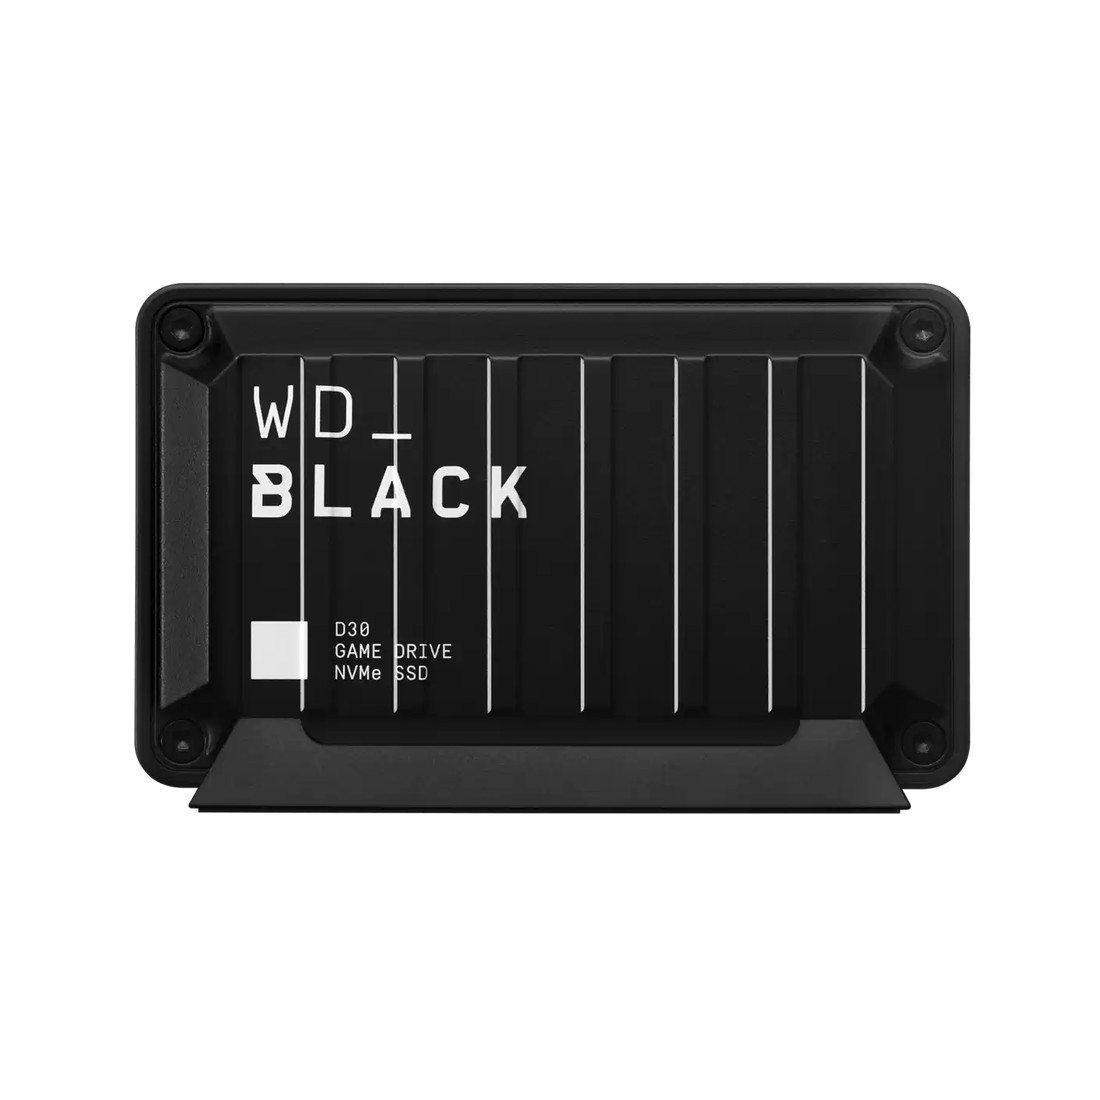 WD Black D30 Game Drive 1TB External SSD